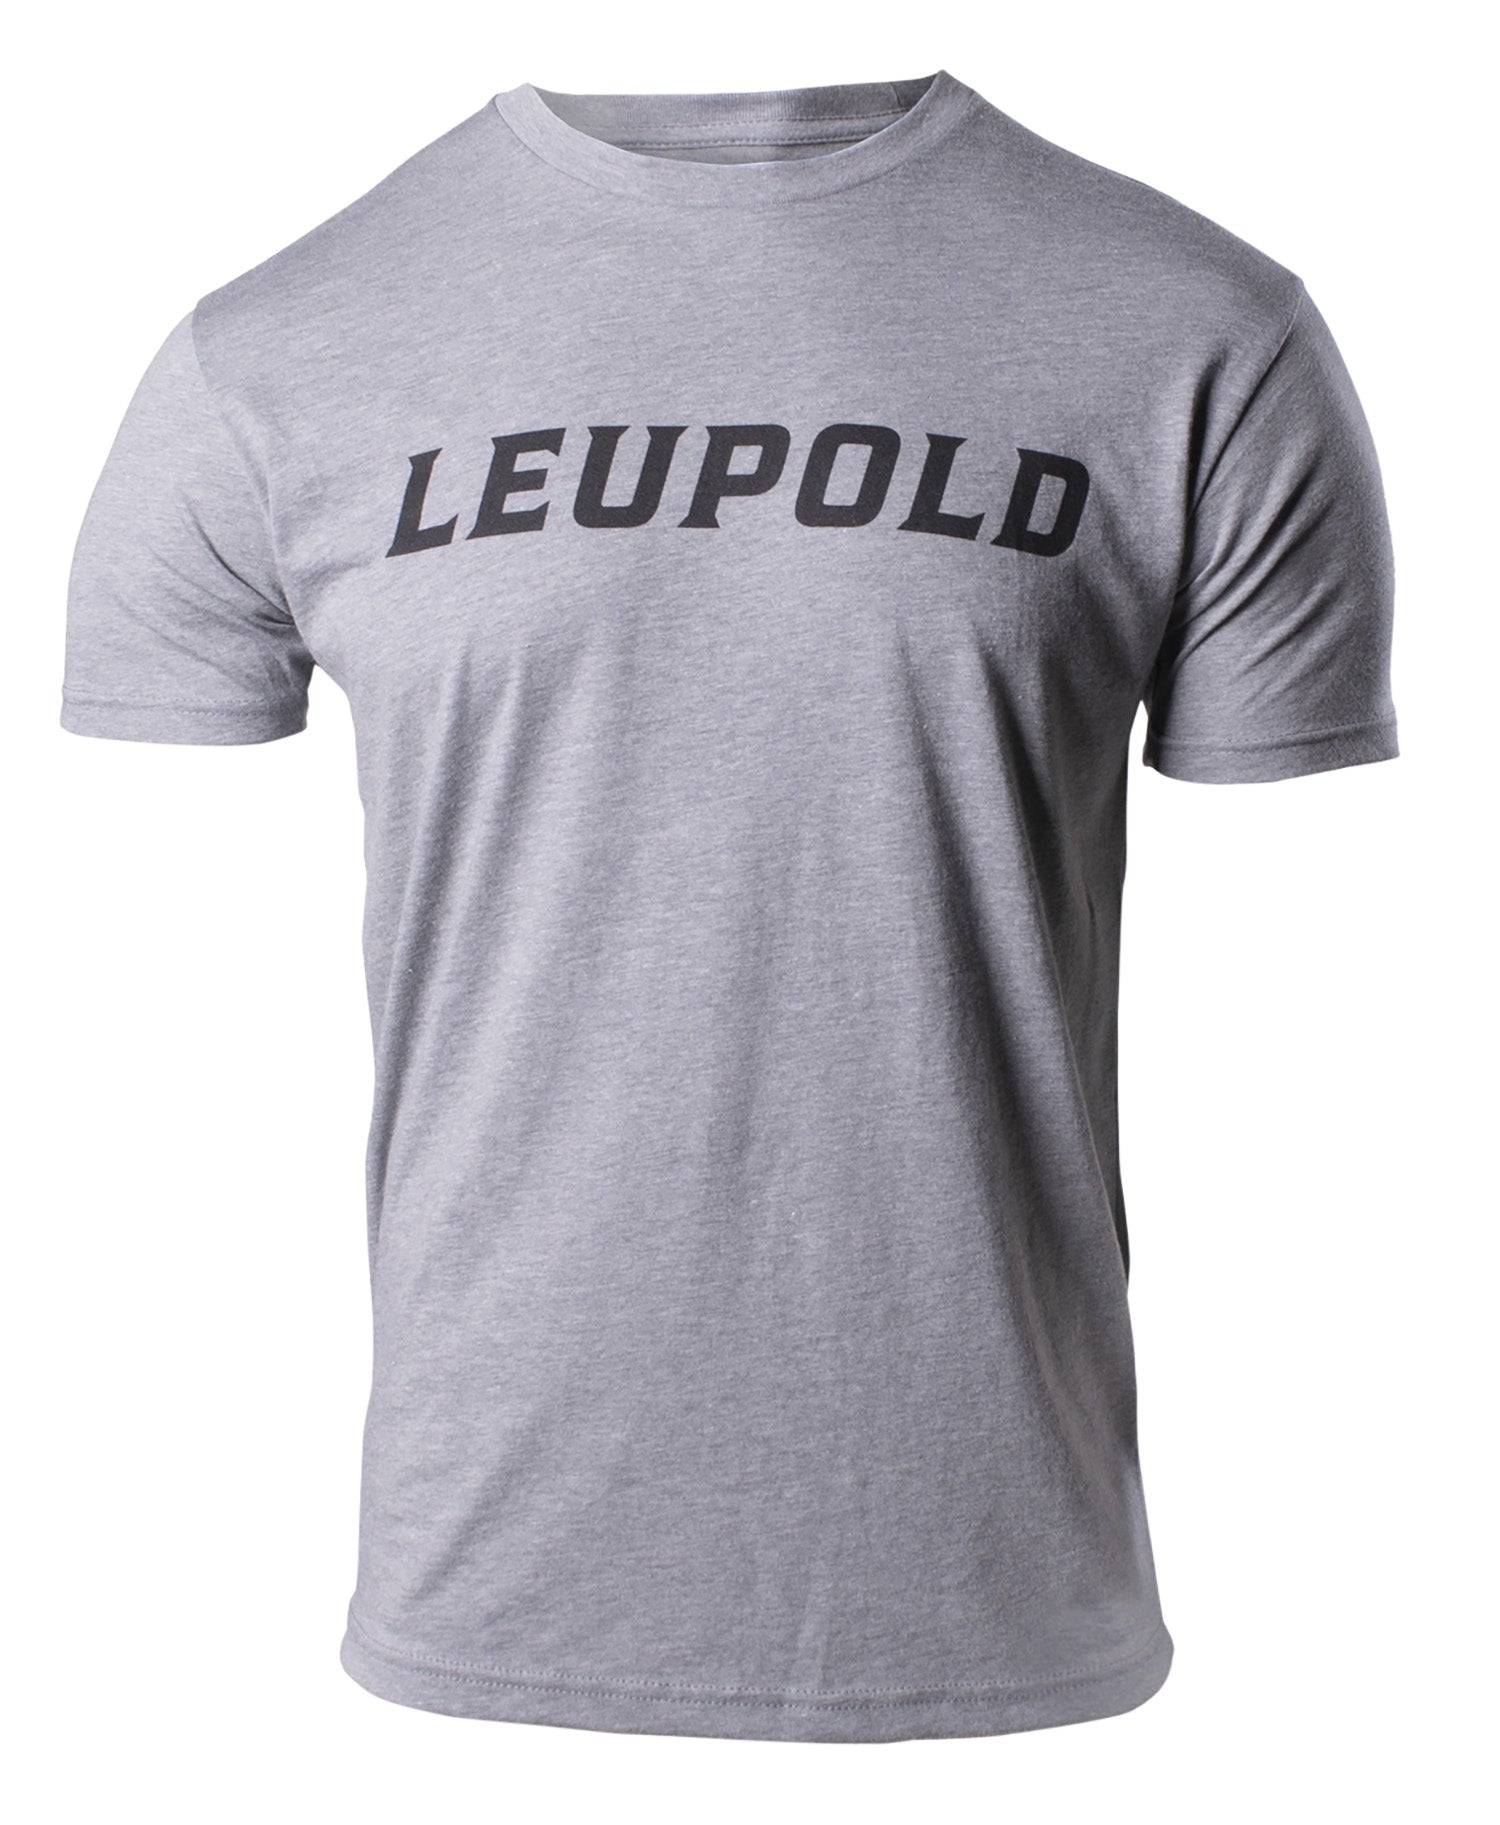 Leupold 180229 Wordmark Graphite Heather Cotton/Polyester Short Sleeve Medium